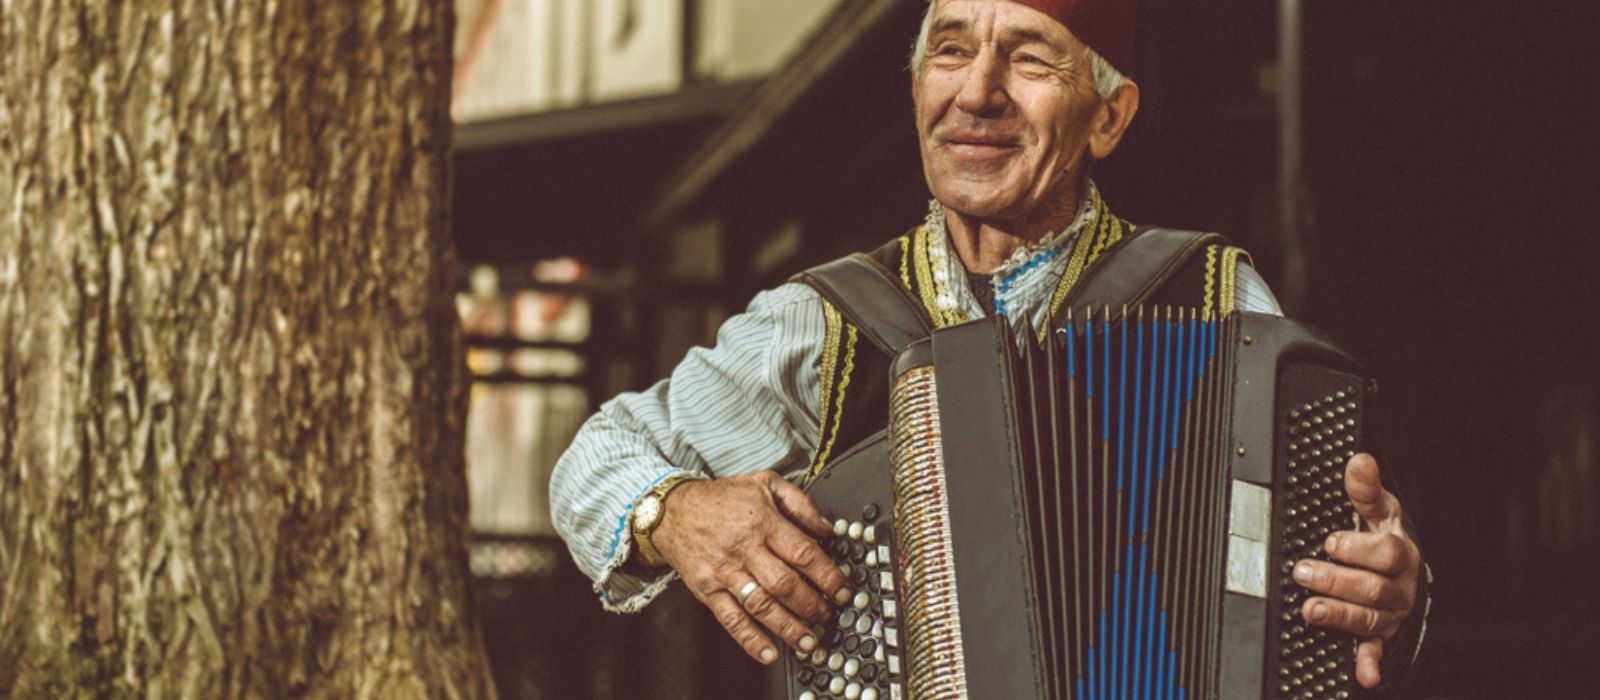 Balkan accordions